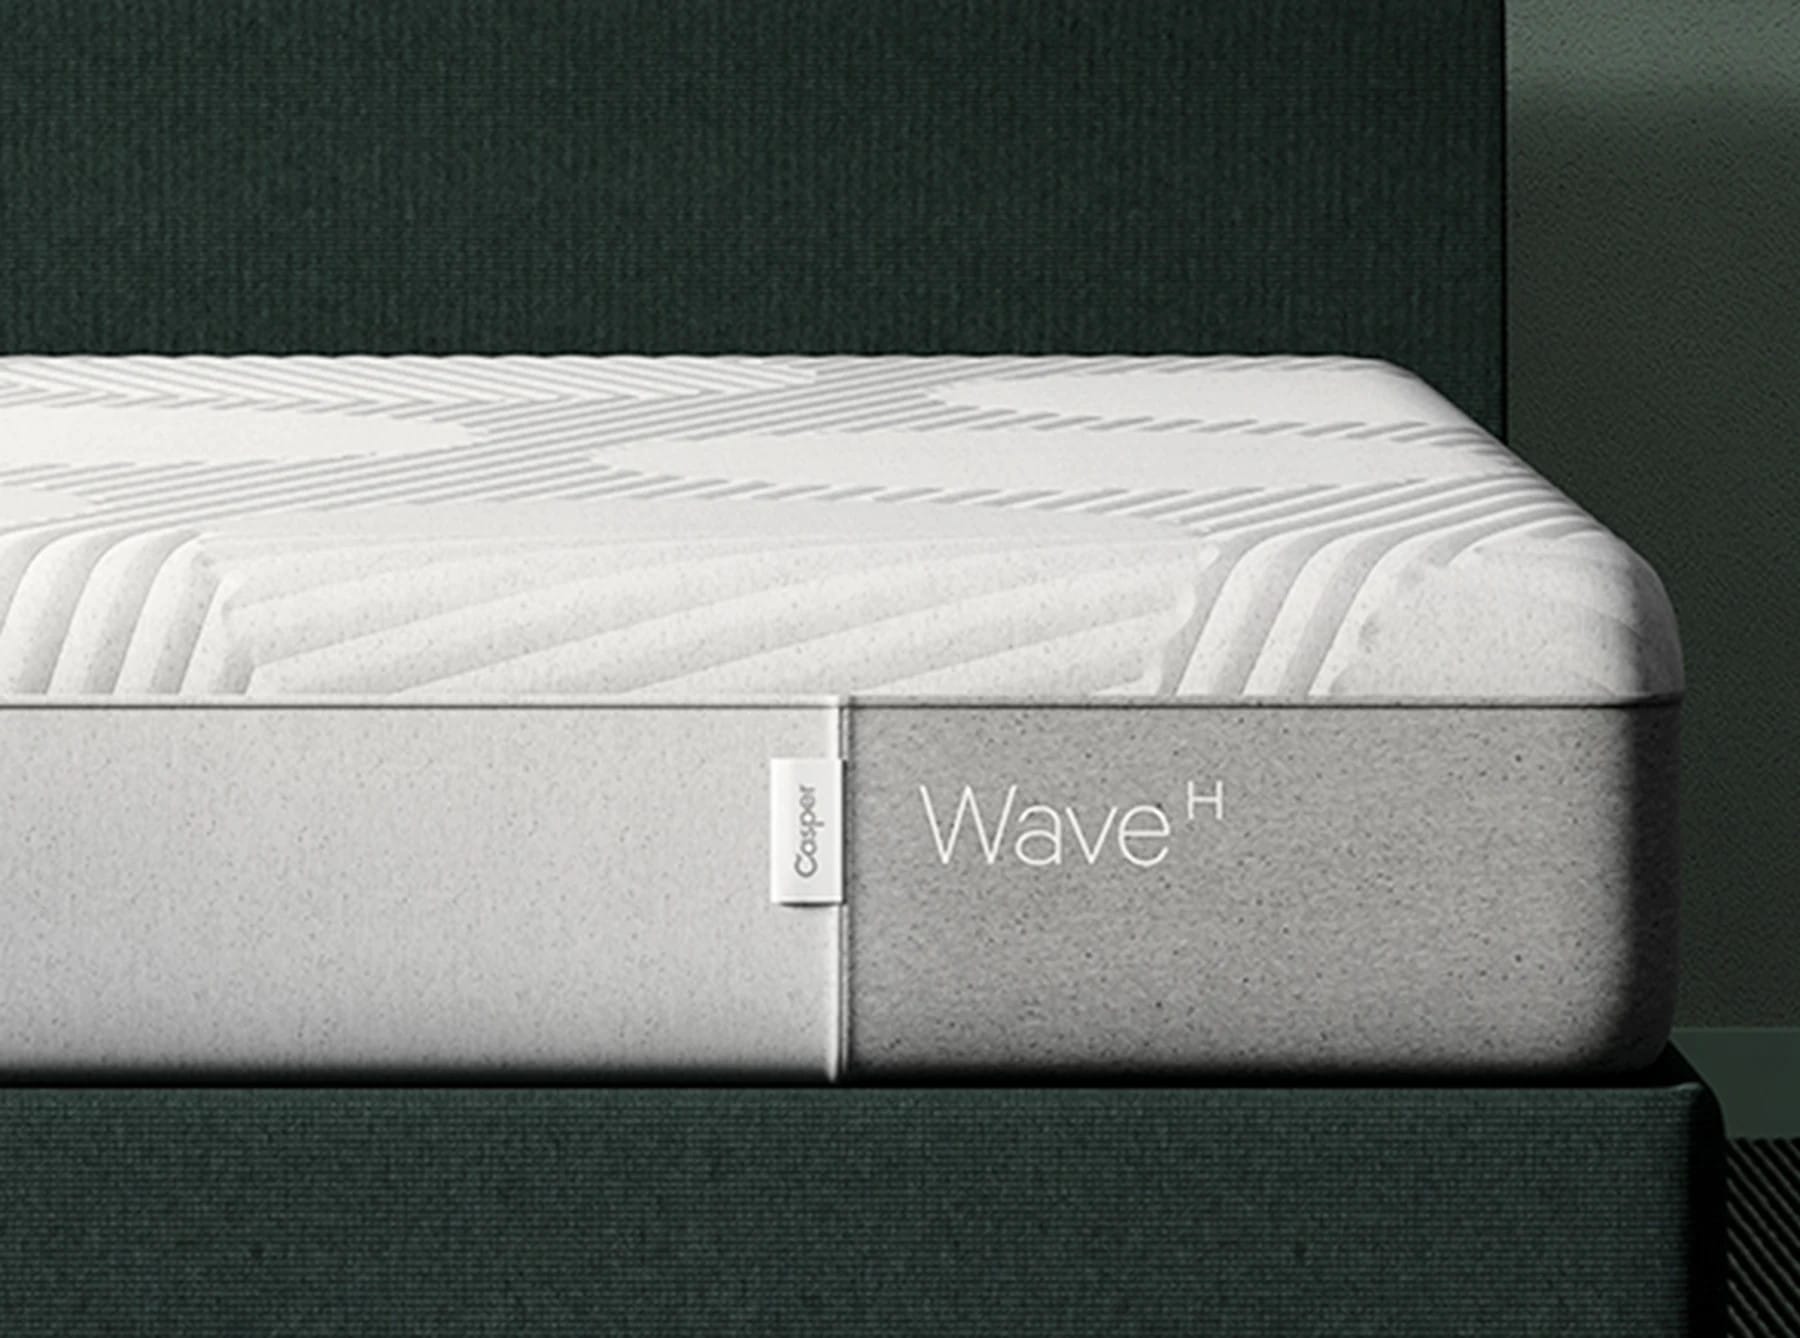 casper wave mattress review reddit